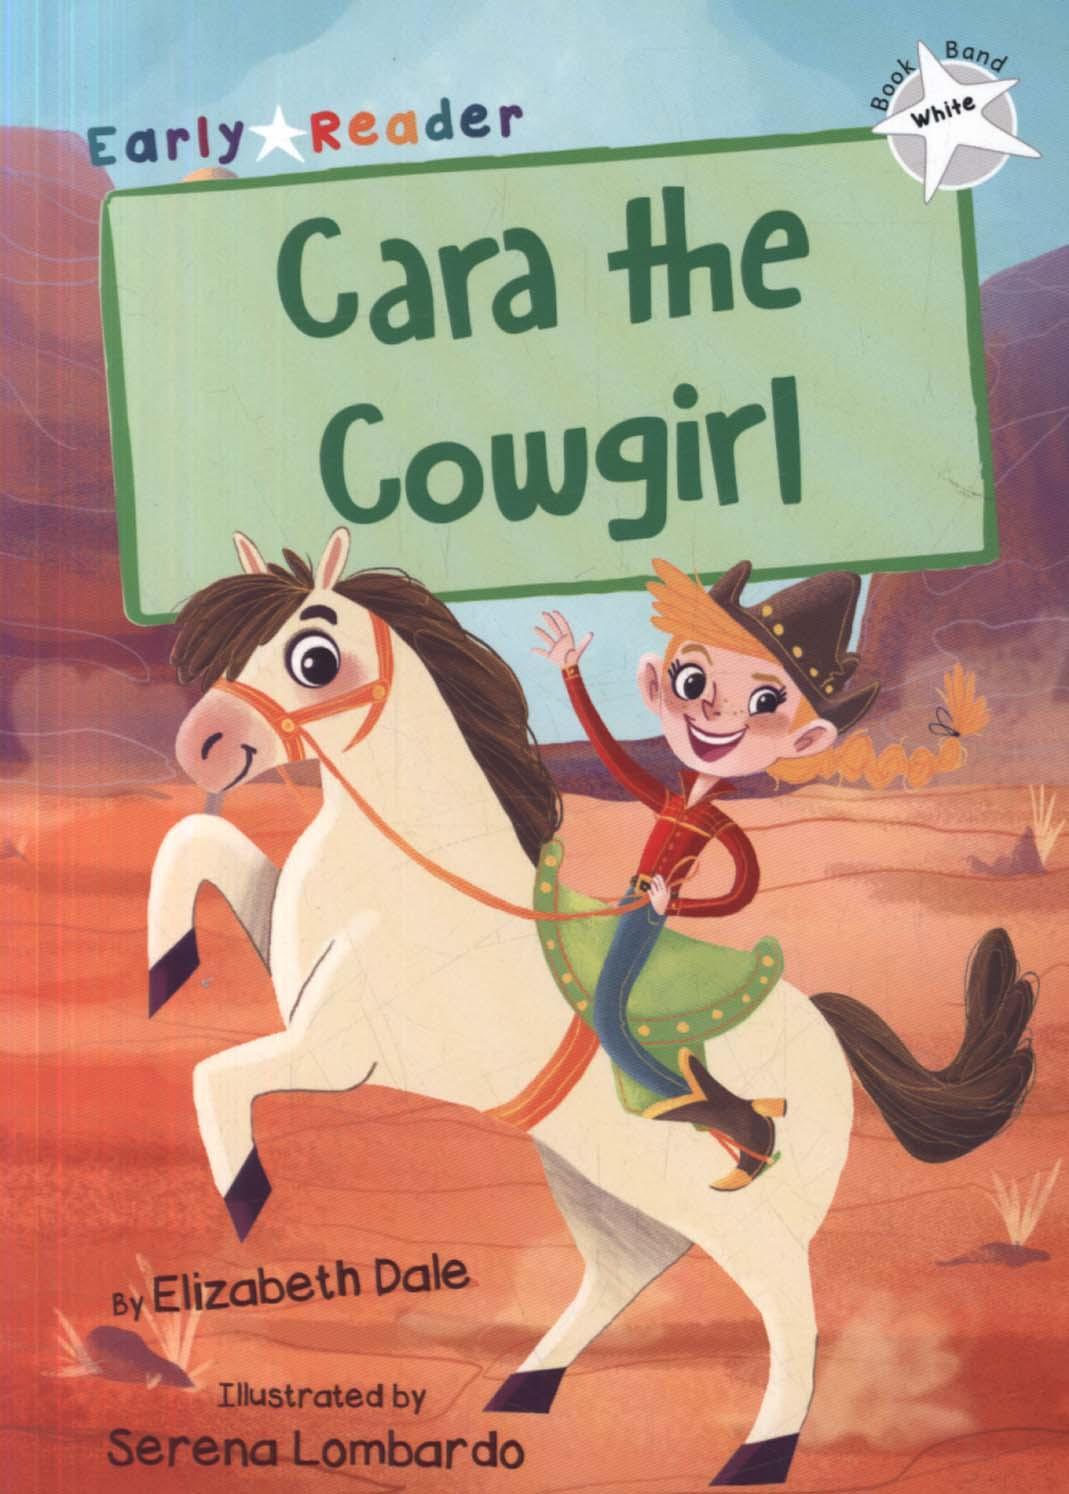 Cara the Cowgirl